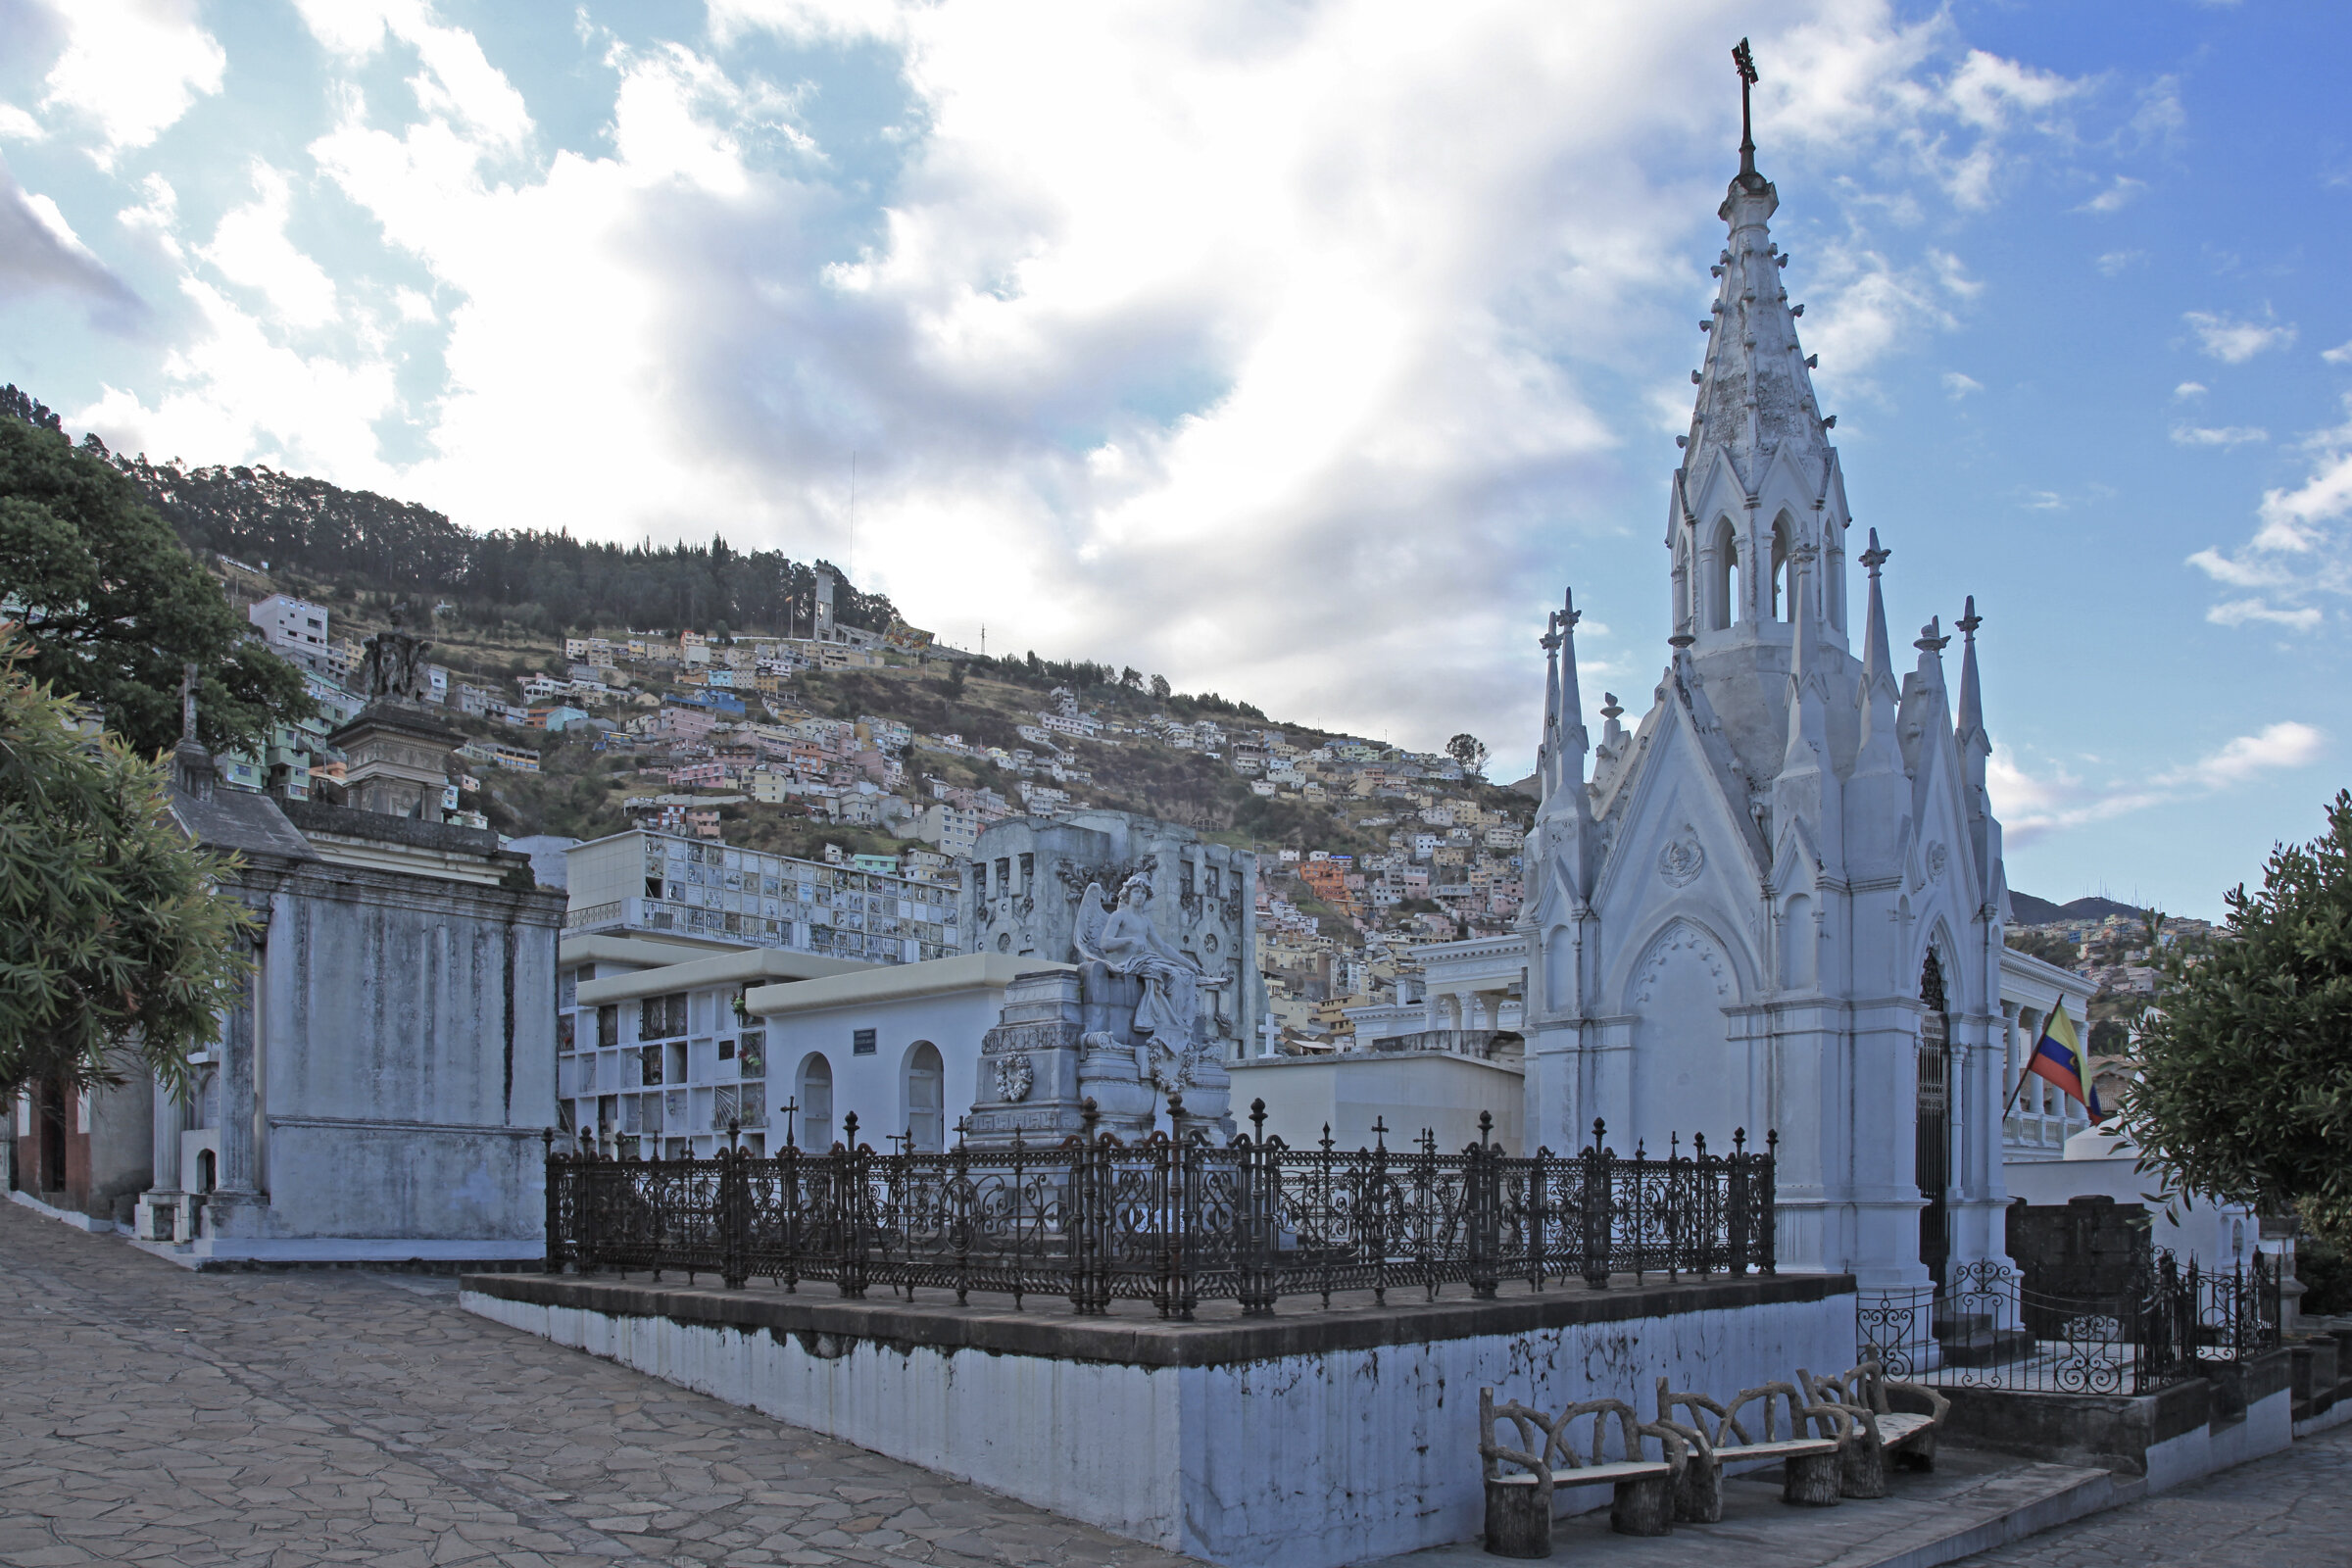  Cemeterio de San Diego, Quito, Ecuador 